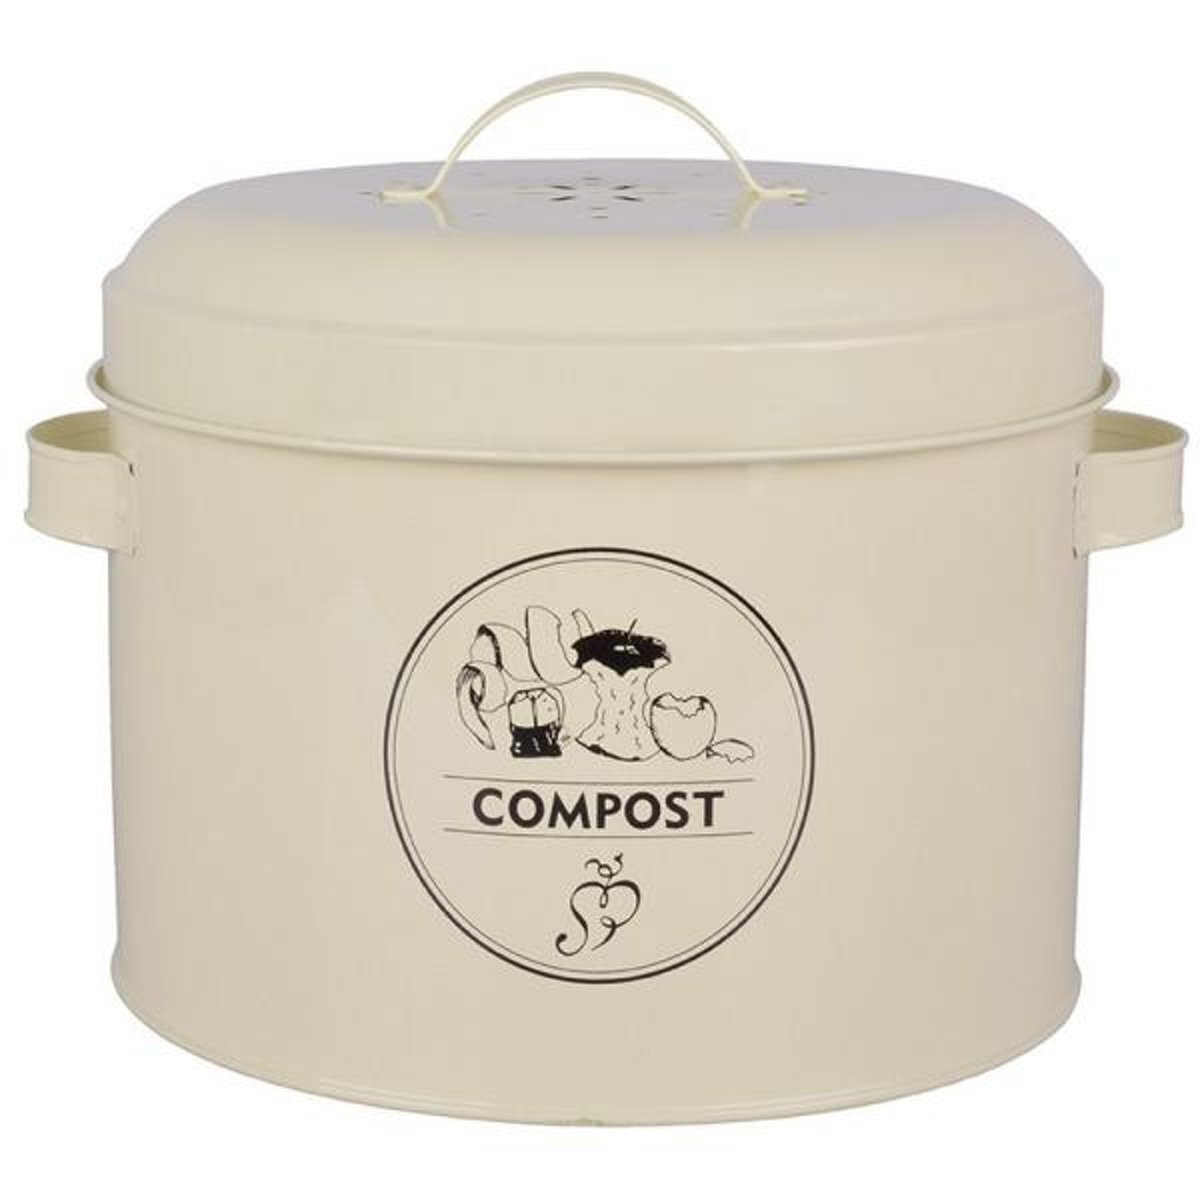 Esschert Design Landelijke Keukenafval compostemmer - 6,3 liter